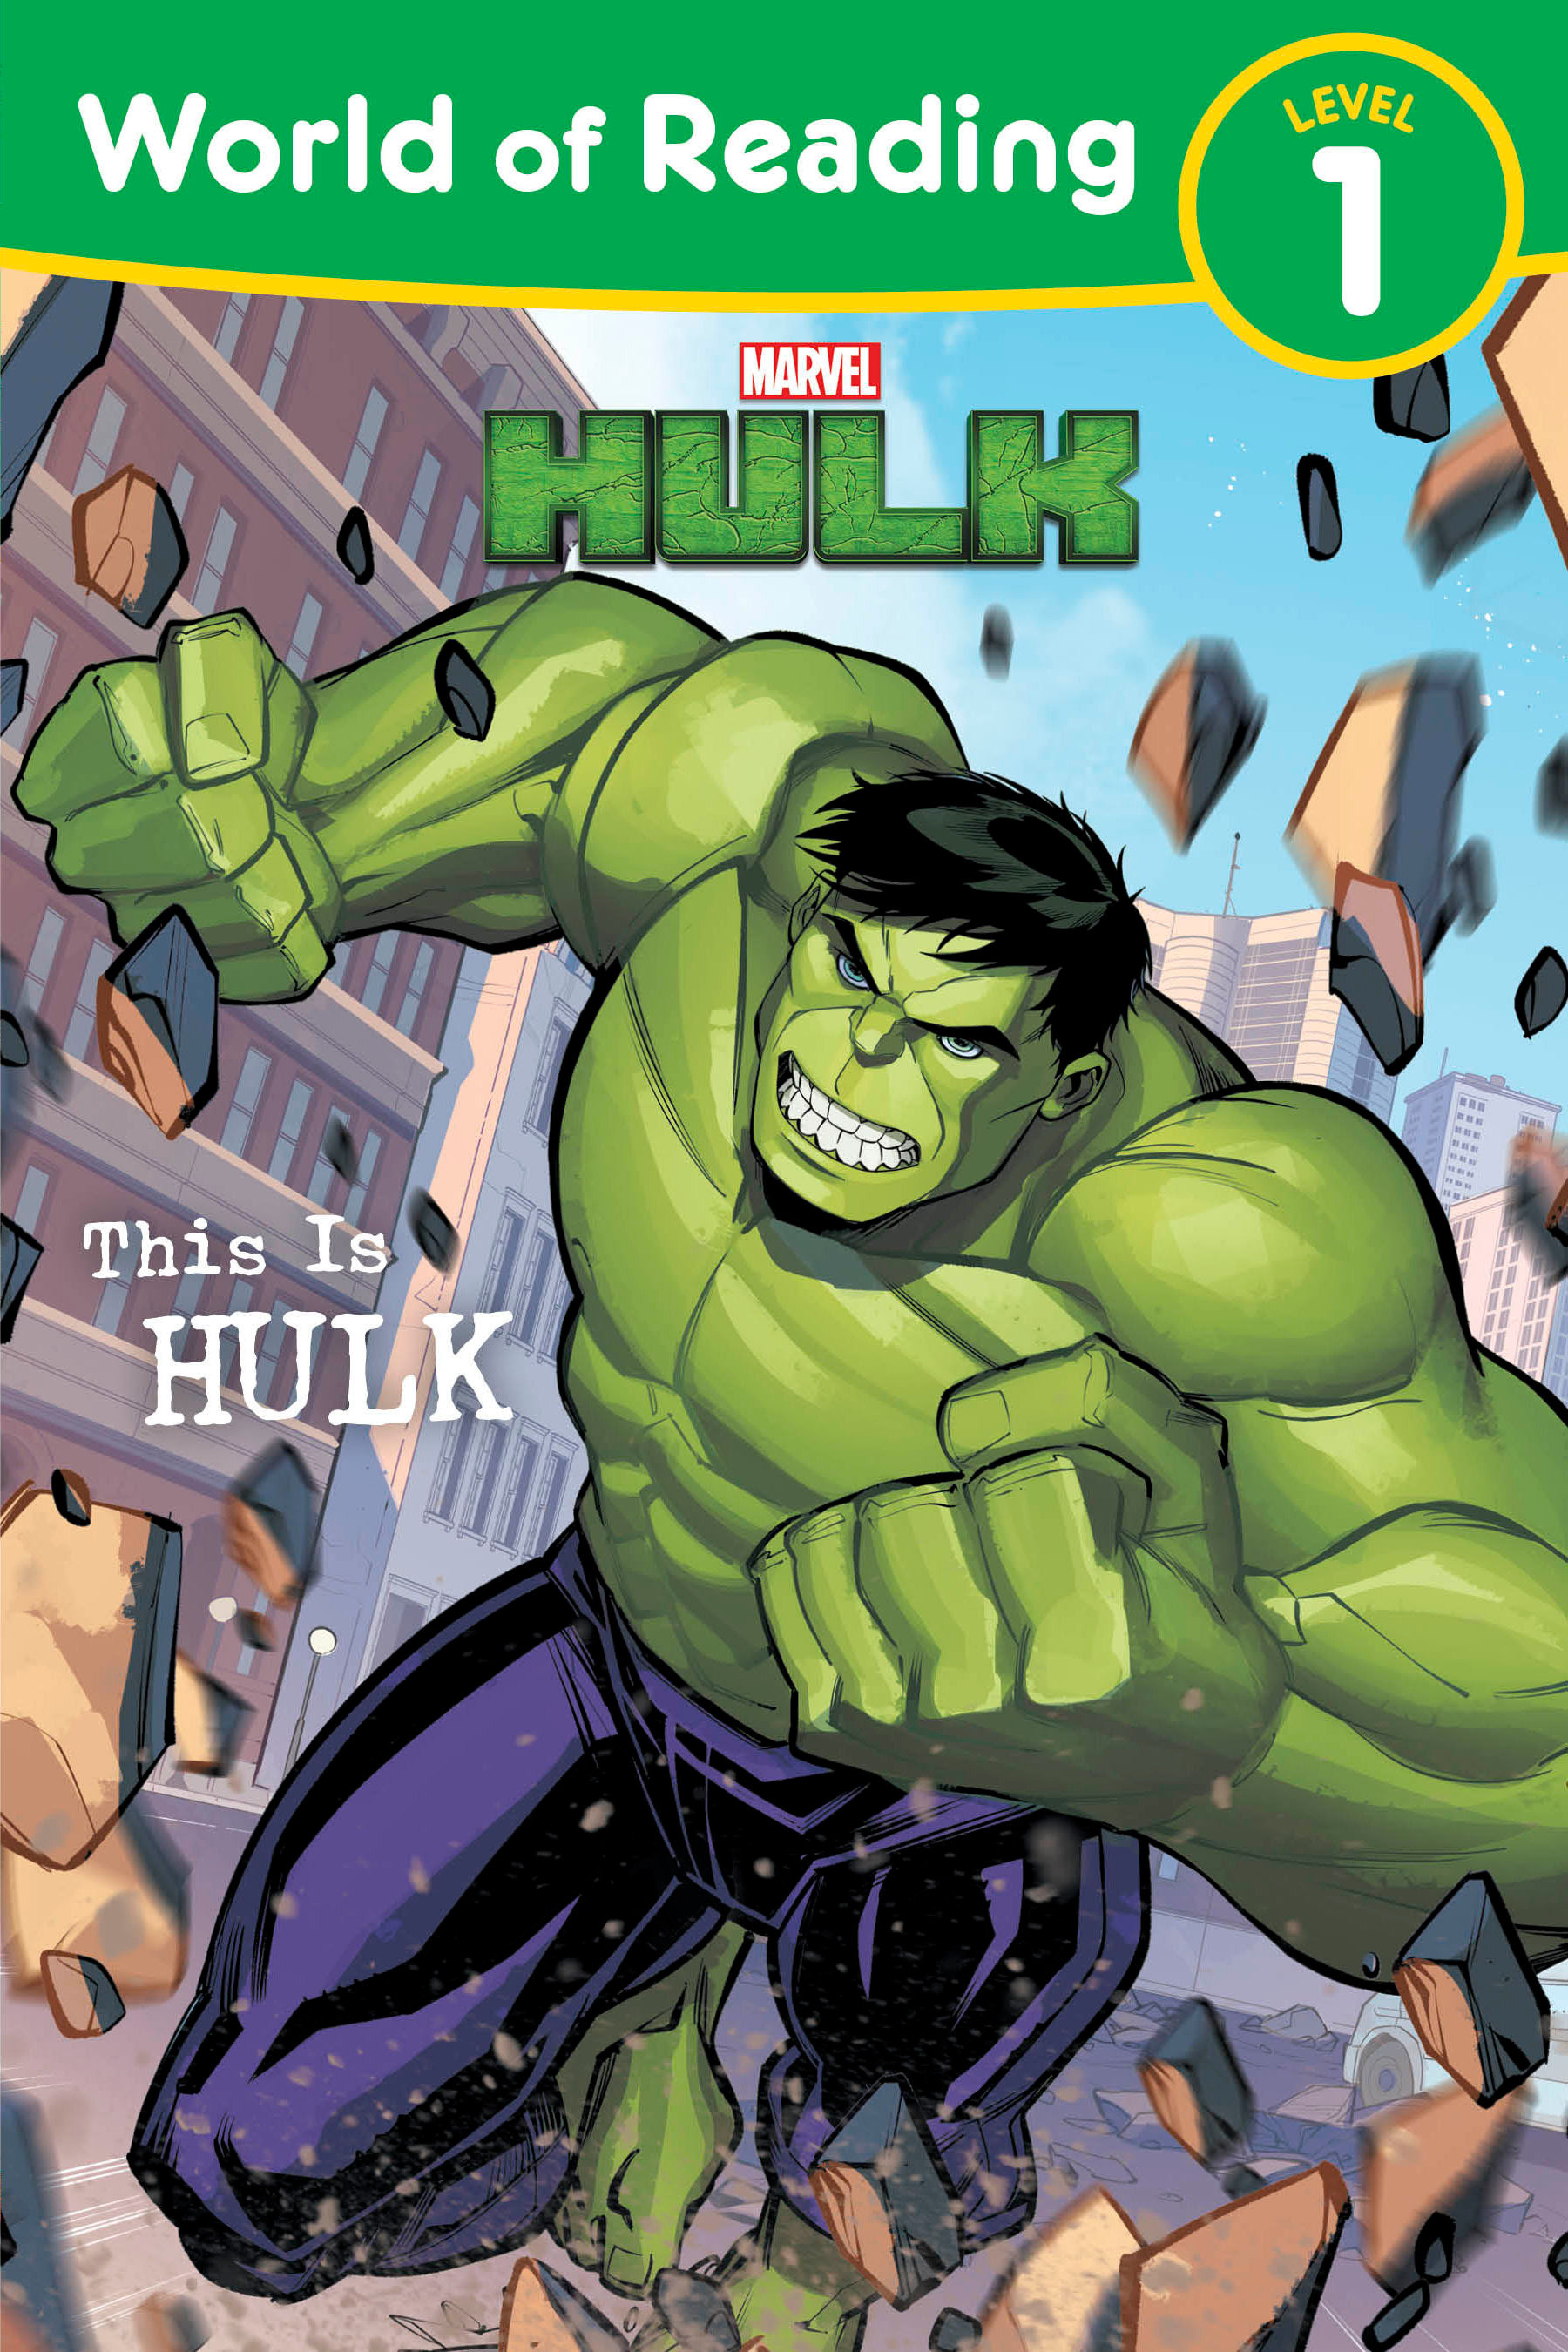 World of Reading Volume 5 This is Hulk